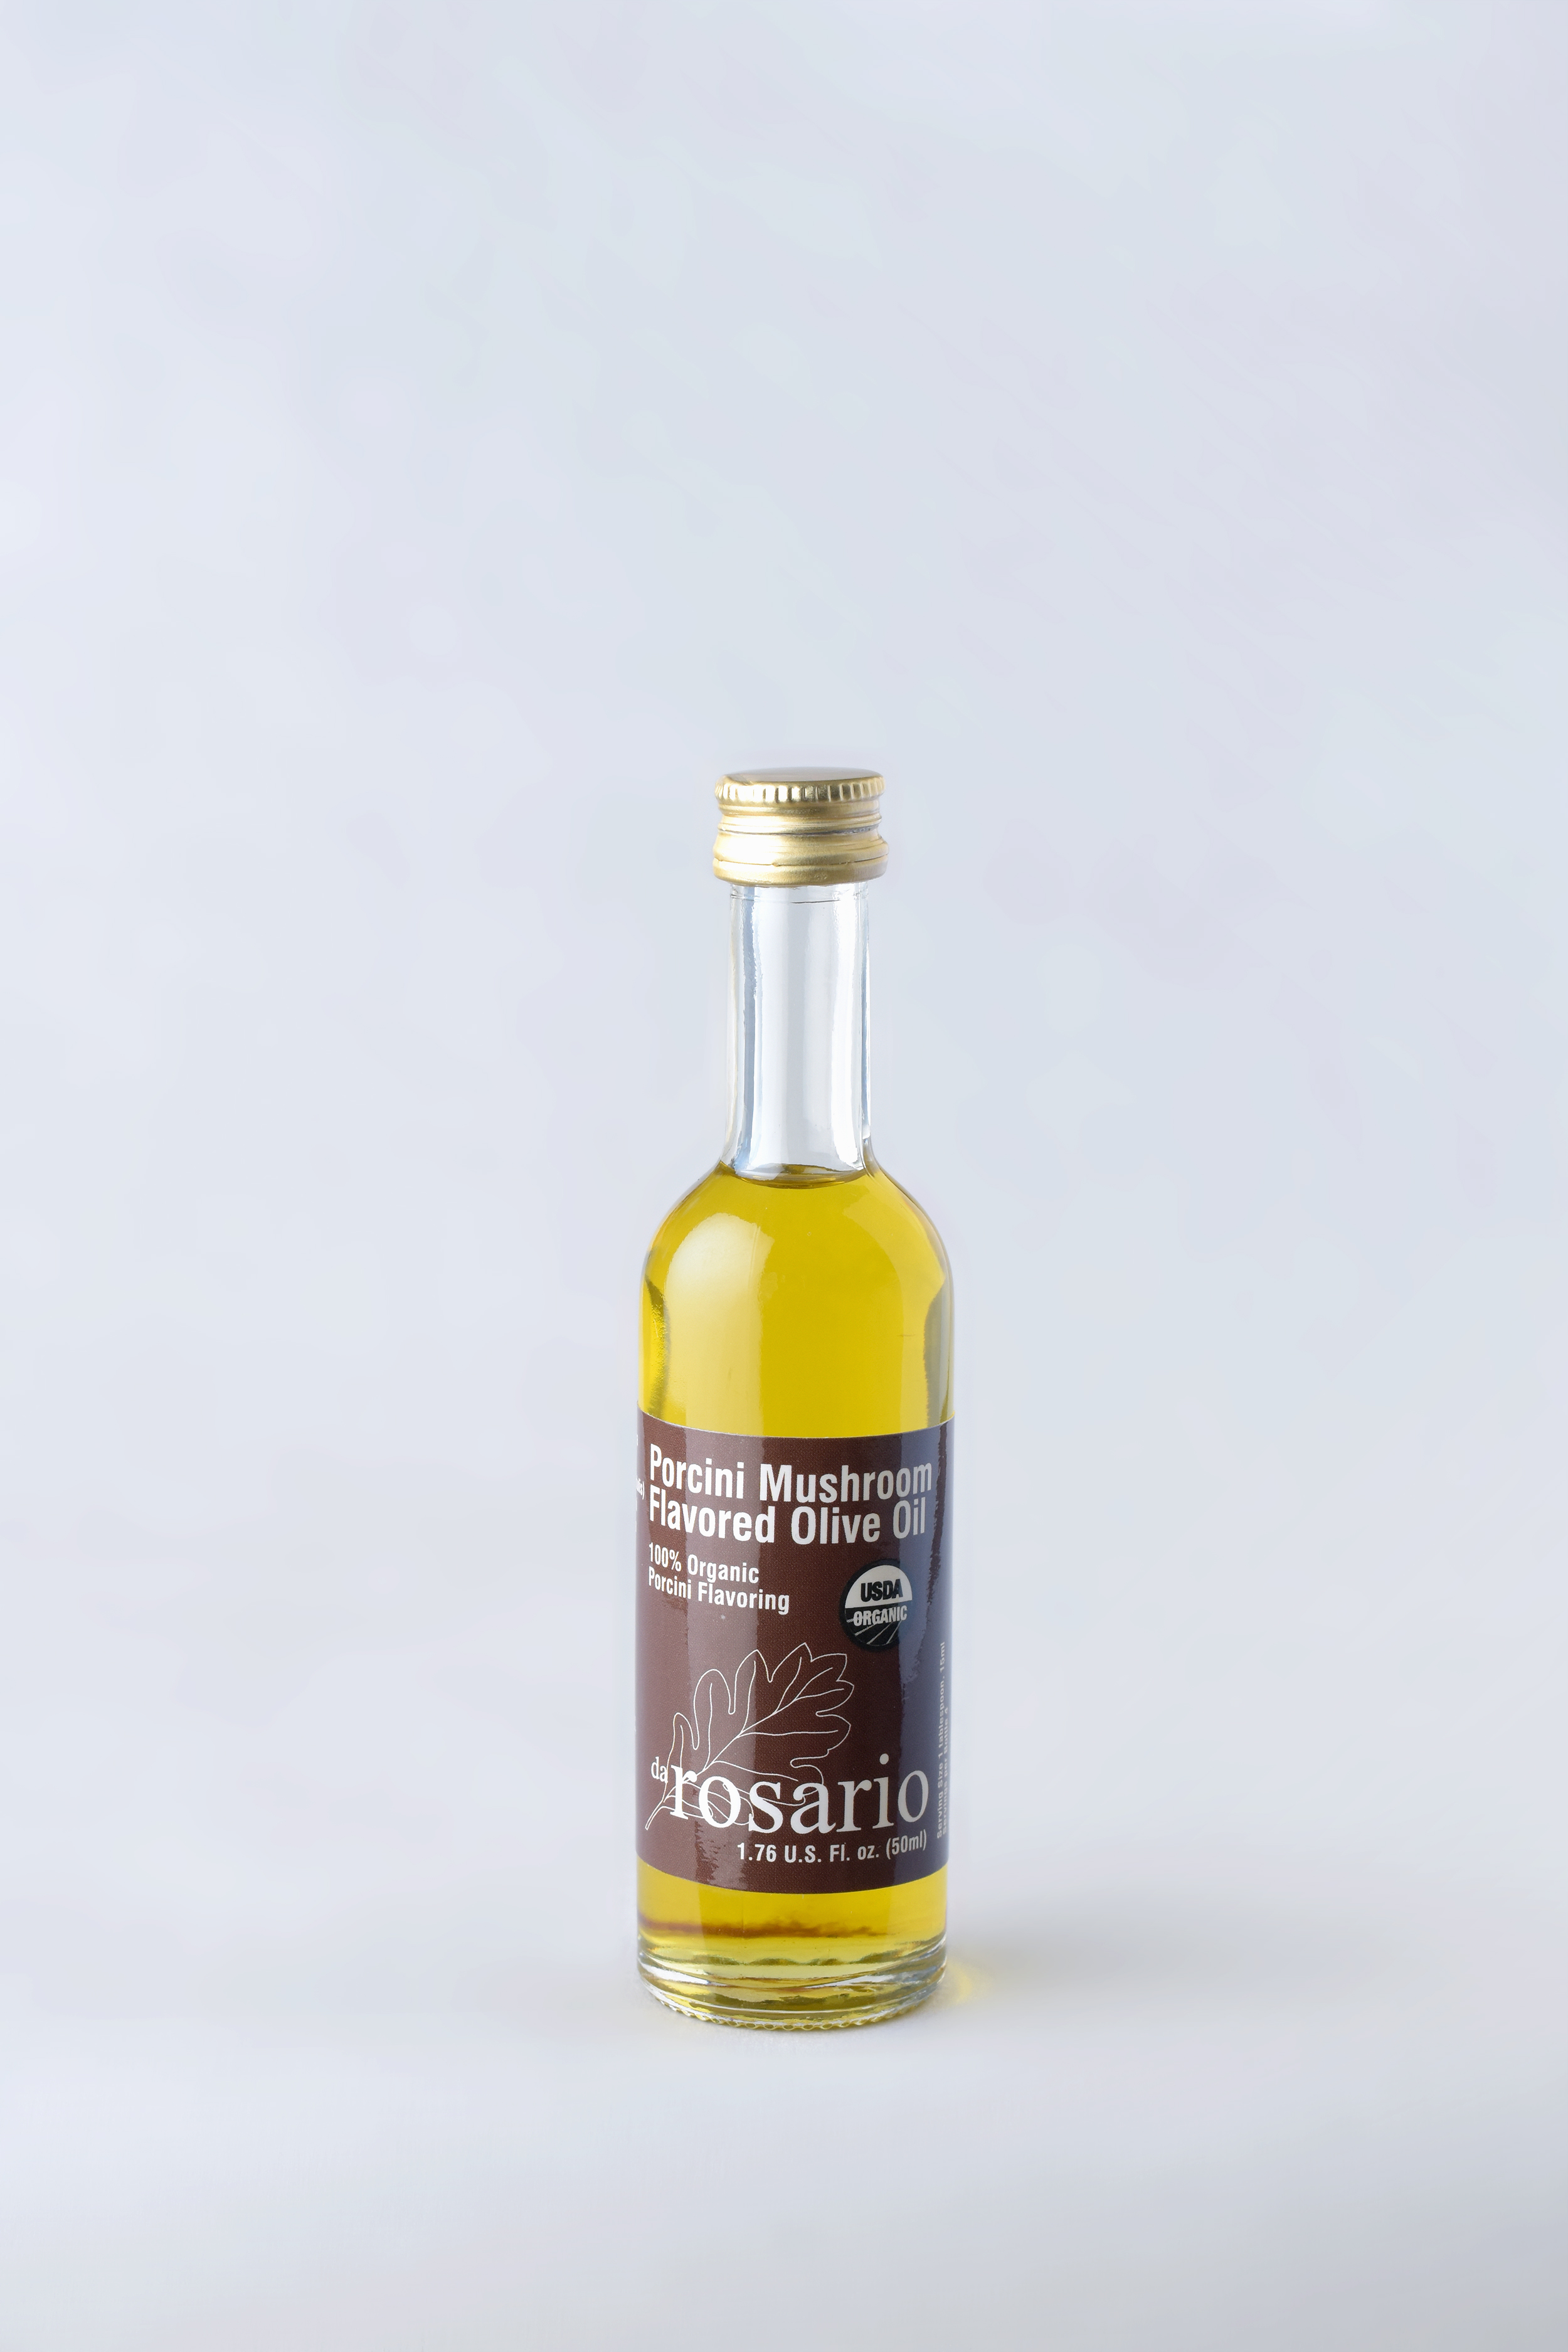 darosario truffle oils